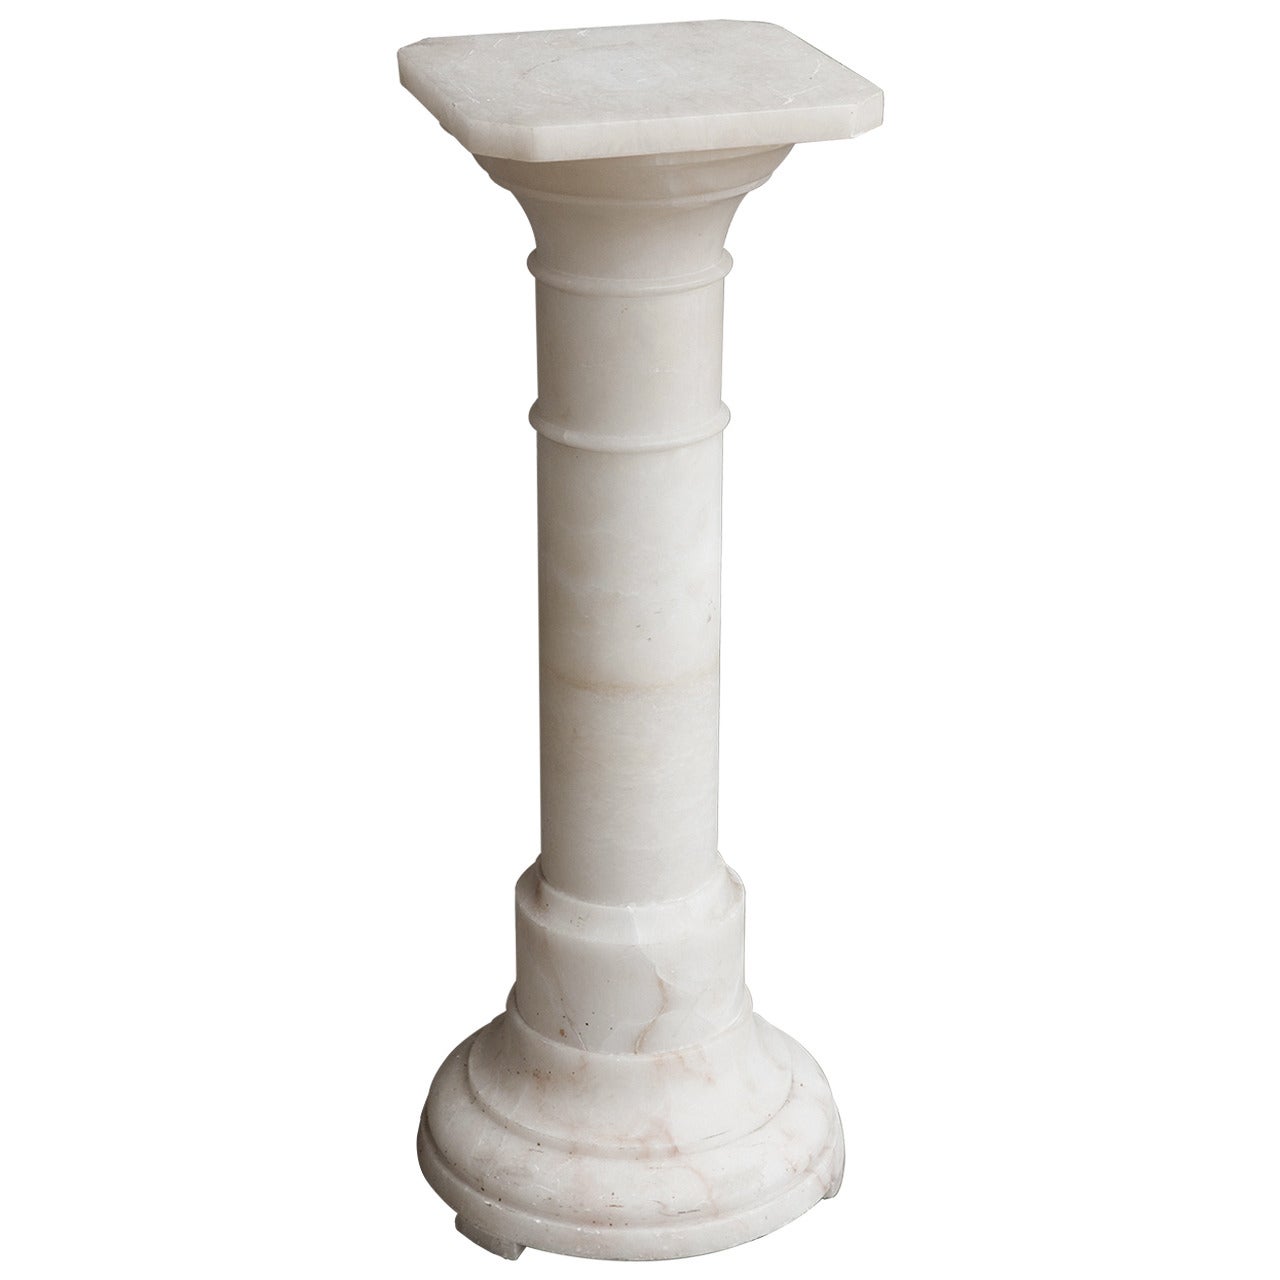 Antique French White Alabaster Columnar or Pedestal Stand, circa 1900